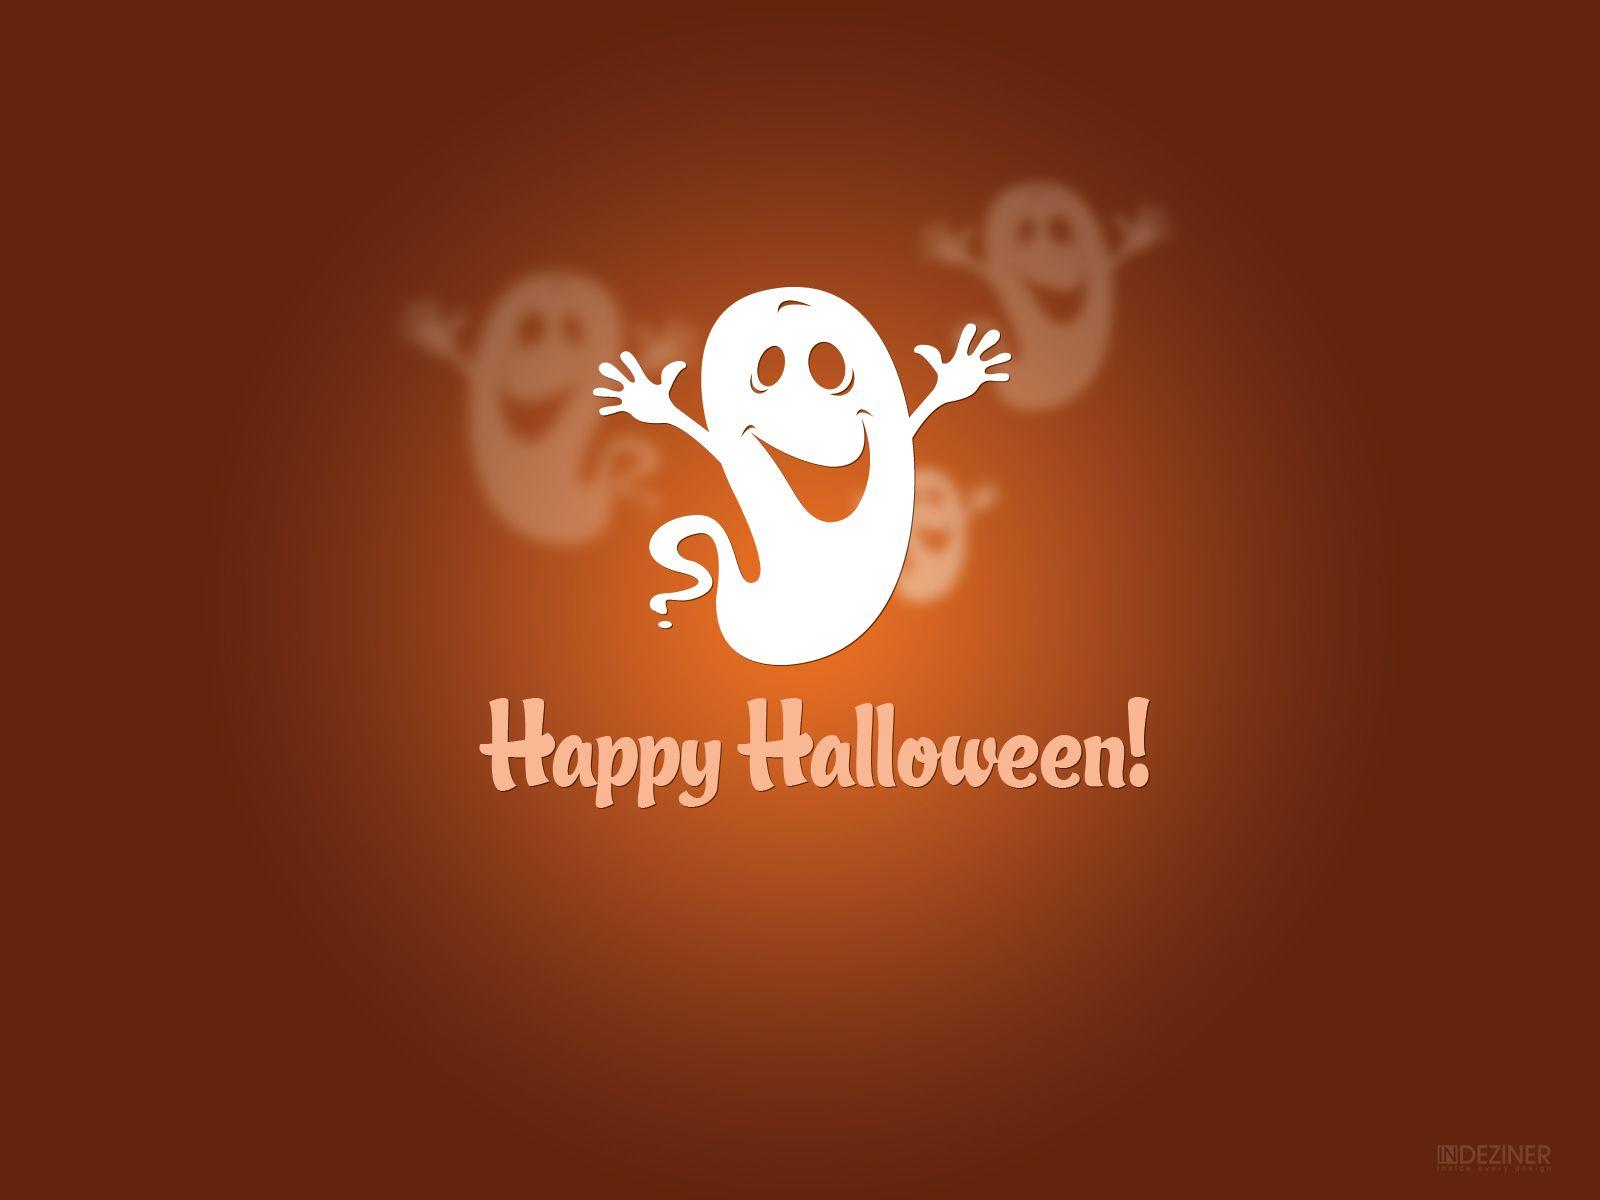 Happy Halloween Wallpaper 24 Background. Wallruru